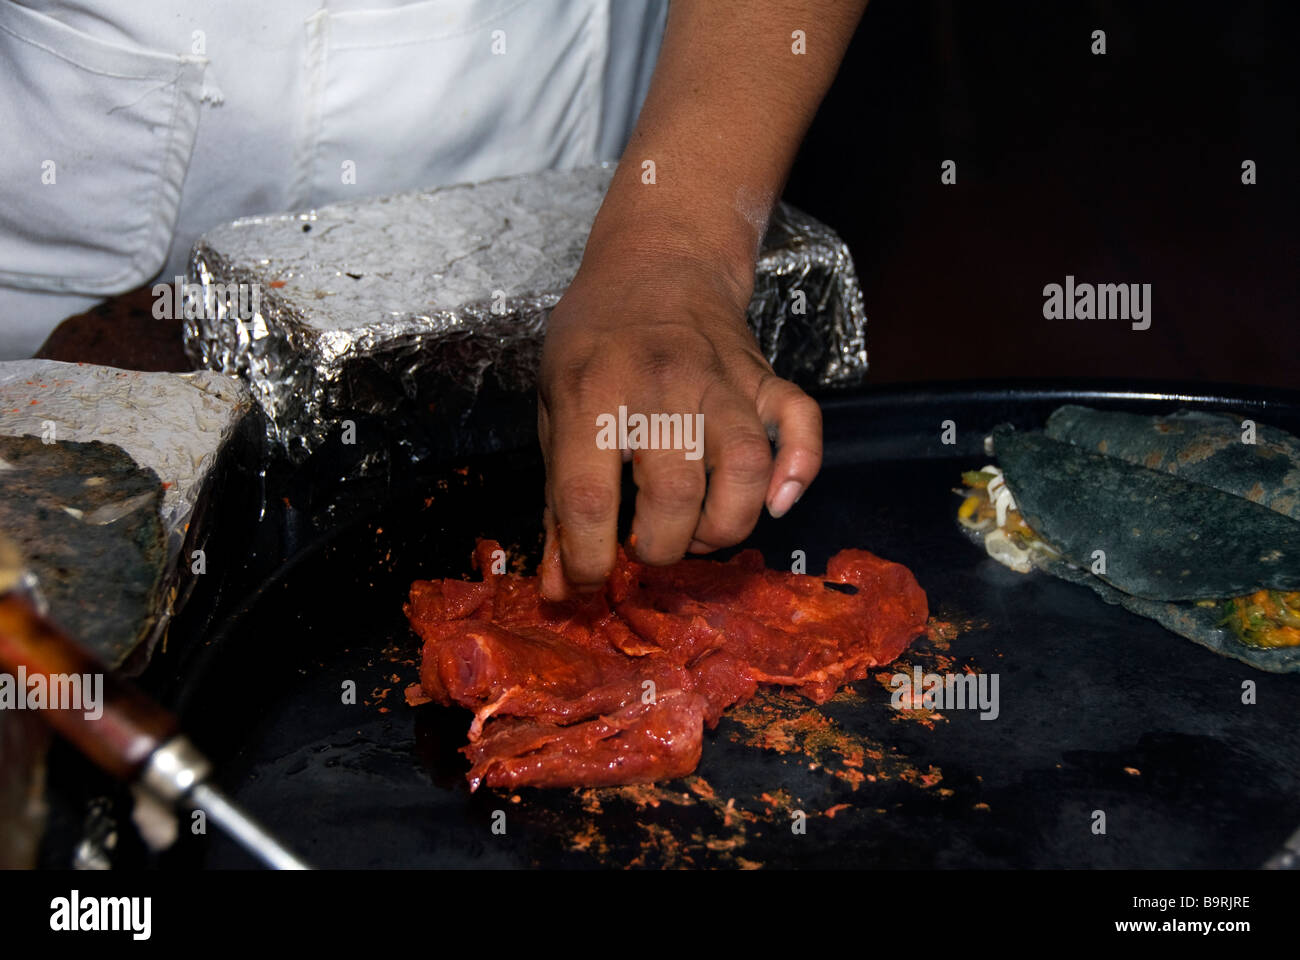 Mexican cuisine, preparing tacos Stock Photo